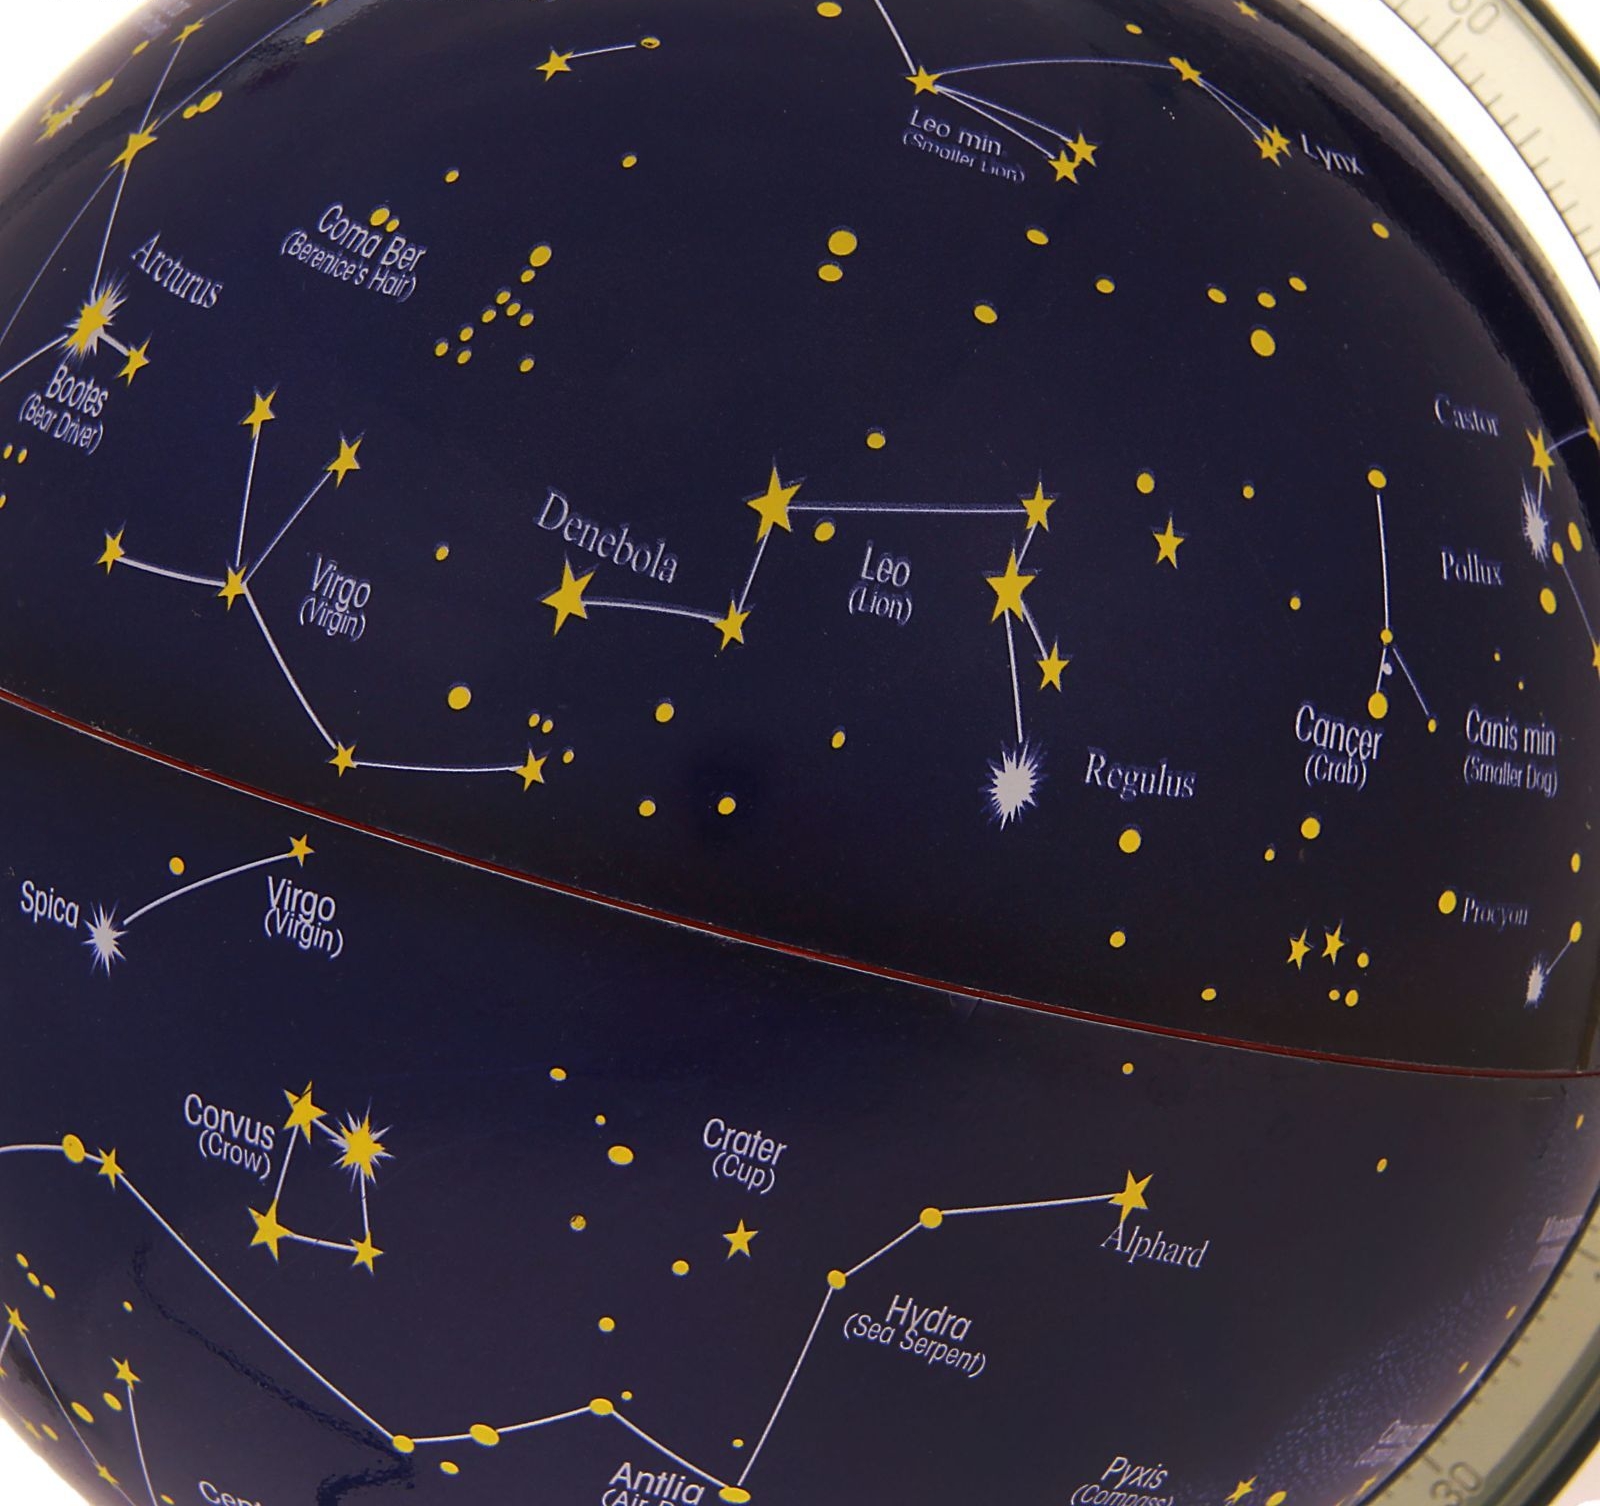 Созвездия на небе. Созвездия астрономия. Карта неба. Небесные созвездия.